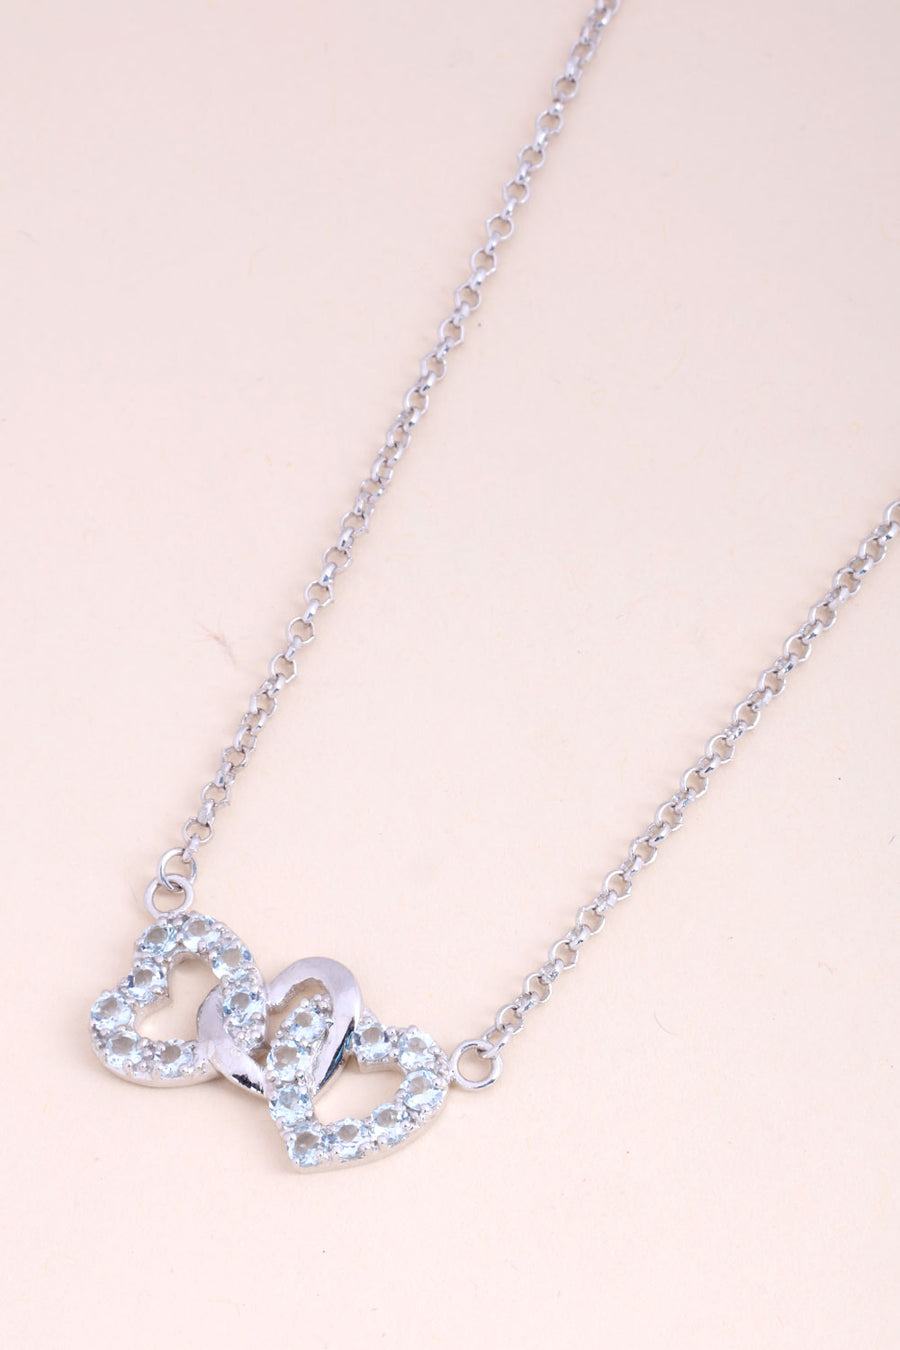 Aquamarine Silver Necklace Pendant Chain 10067135 - Avishya